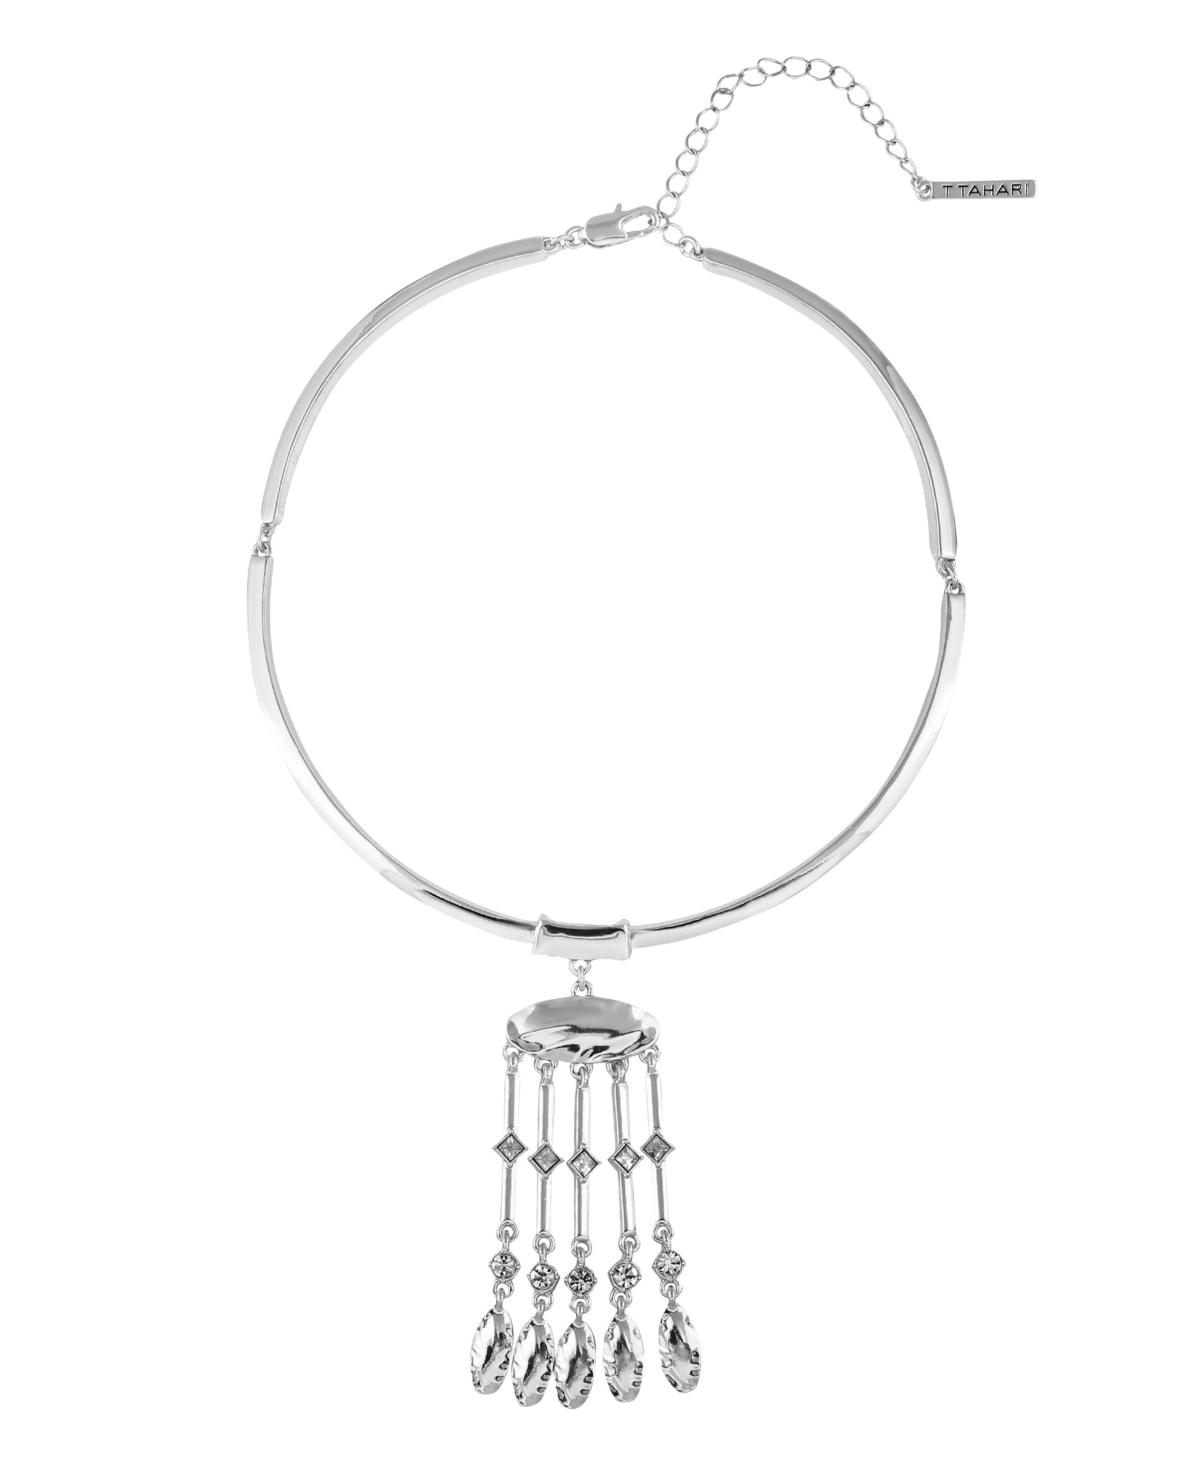 Casual Chic Collar Necklace - Silver-tone